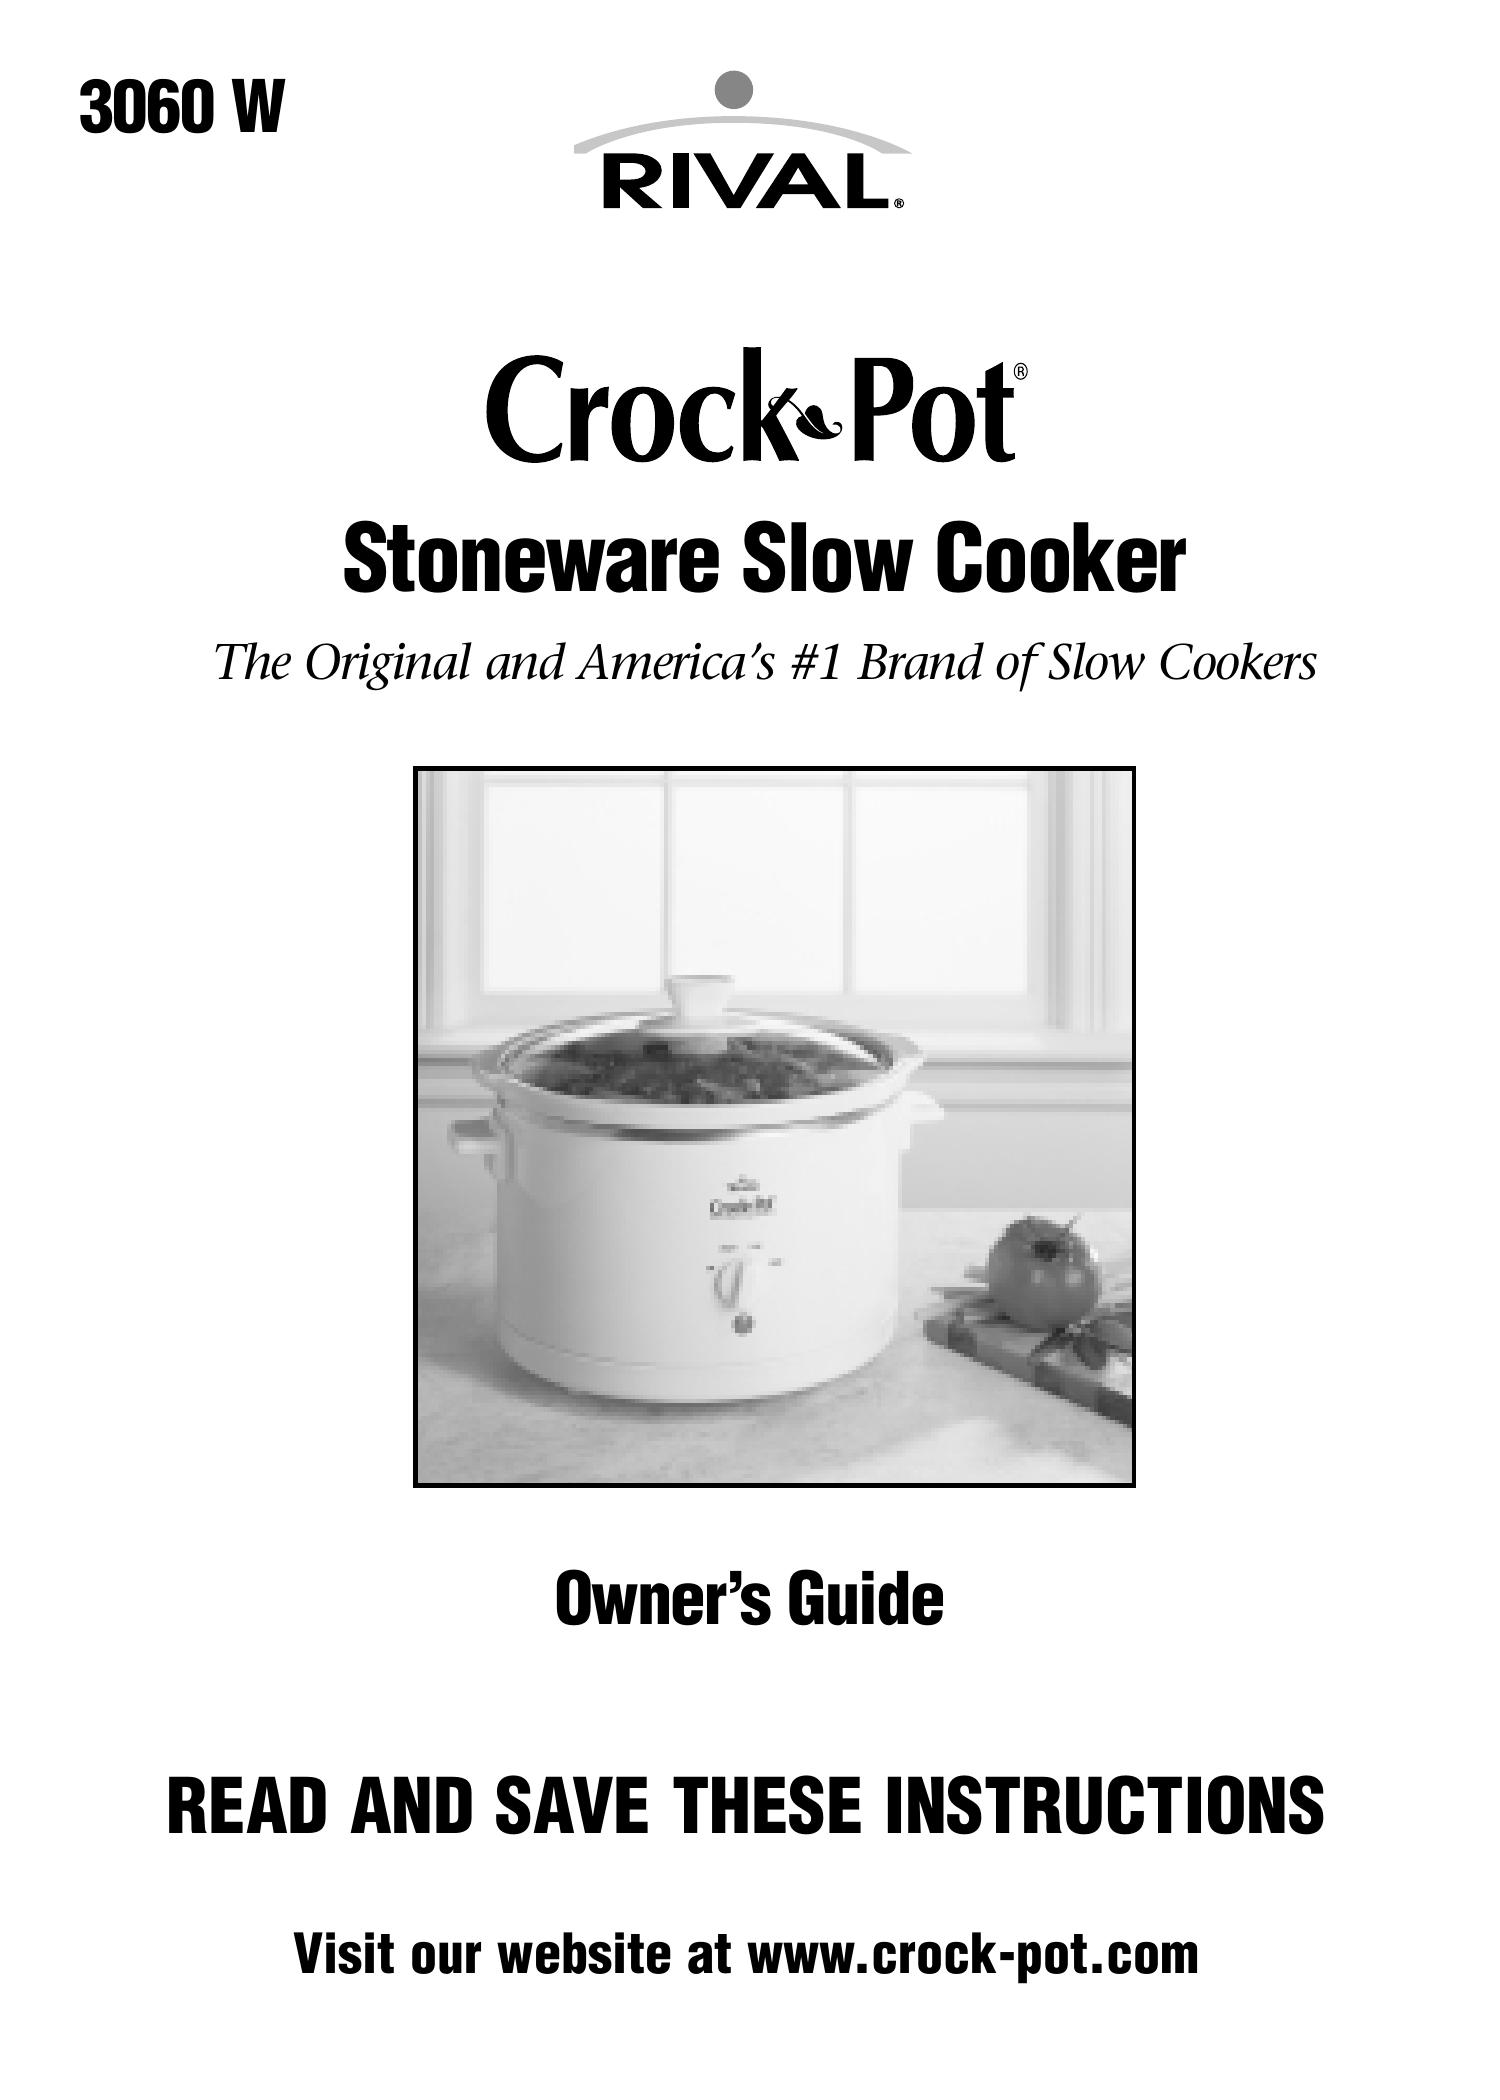 Crock-Pot 3060 W Slow Cooker User Manual